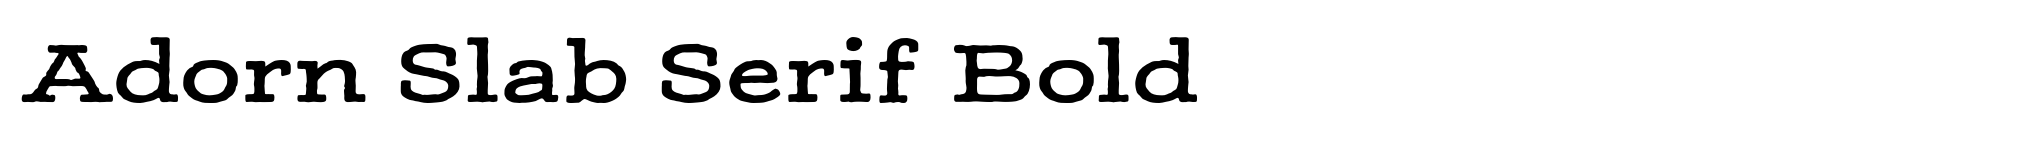 Adorn Slab Serif Bold image